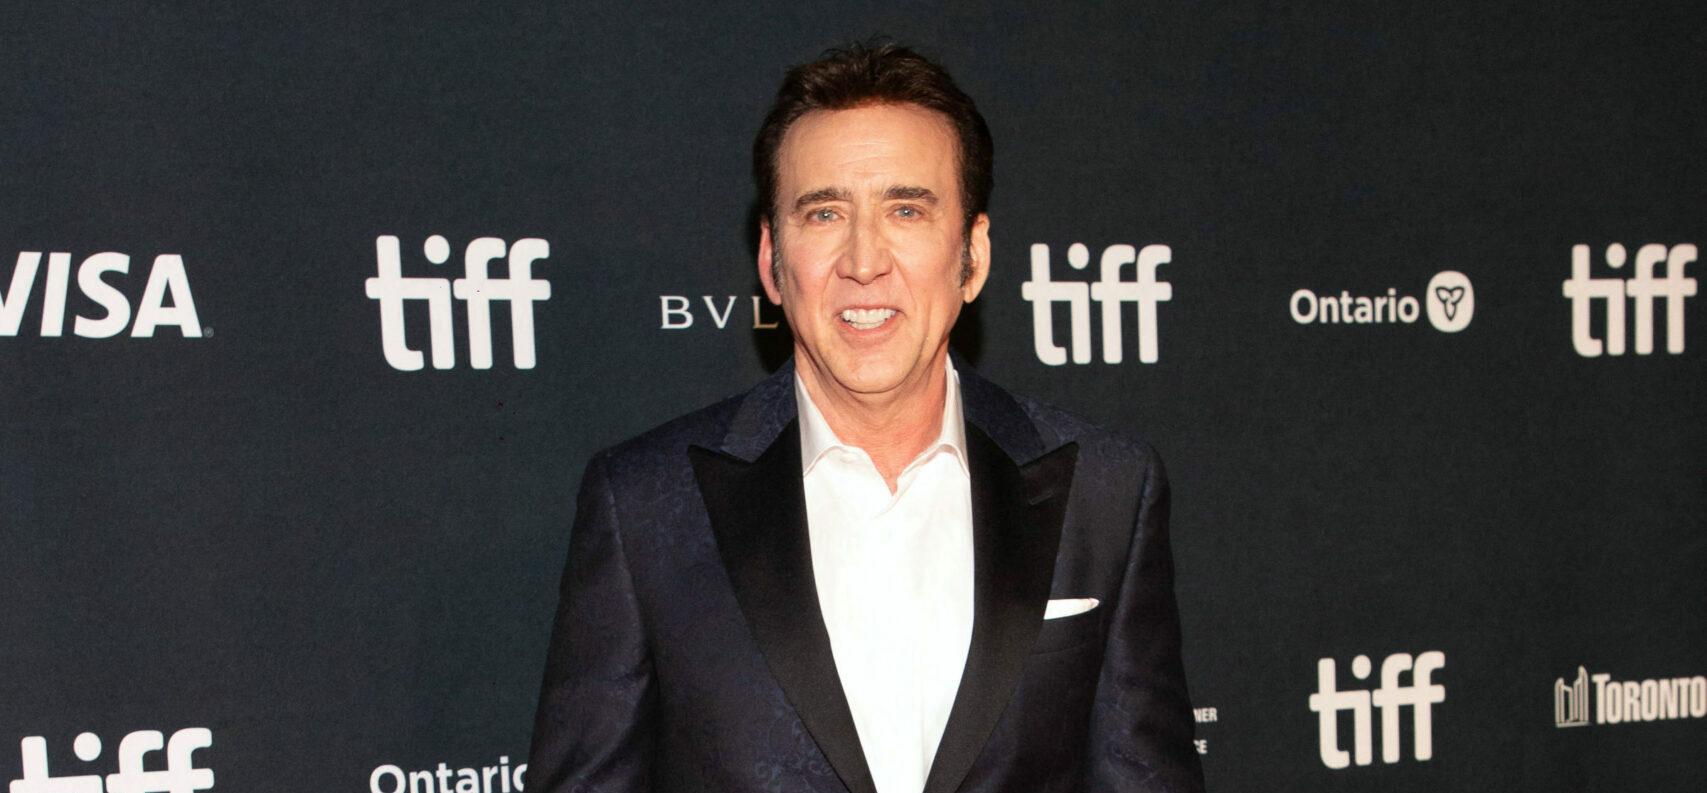 Nicolas Cage at the 2022 Toronto International Film Festival - "Butcher's Crossing" Premiere